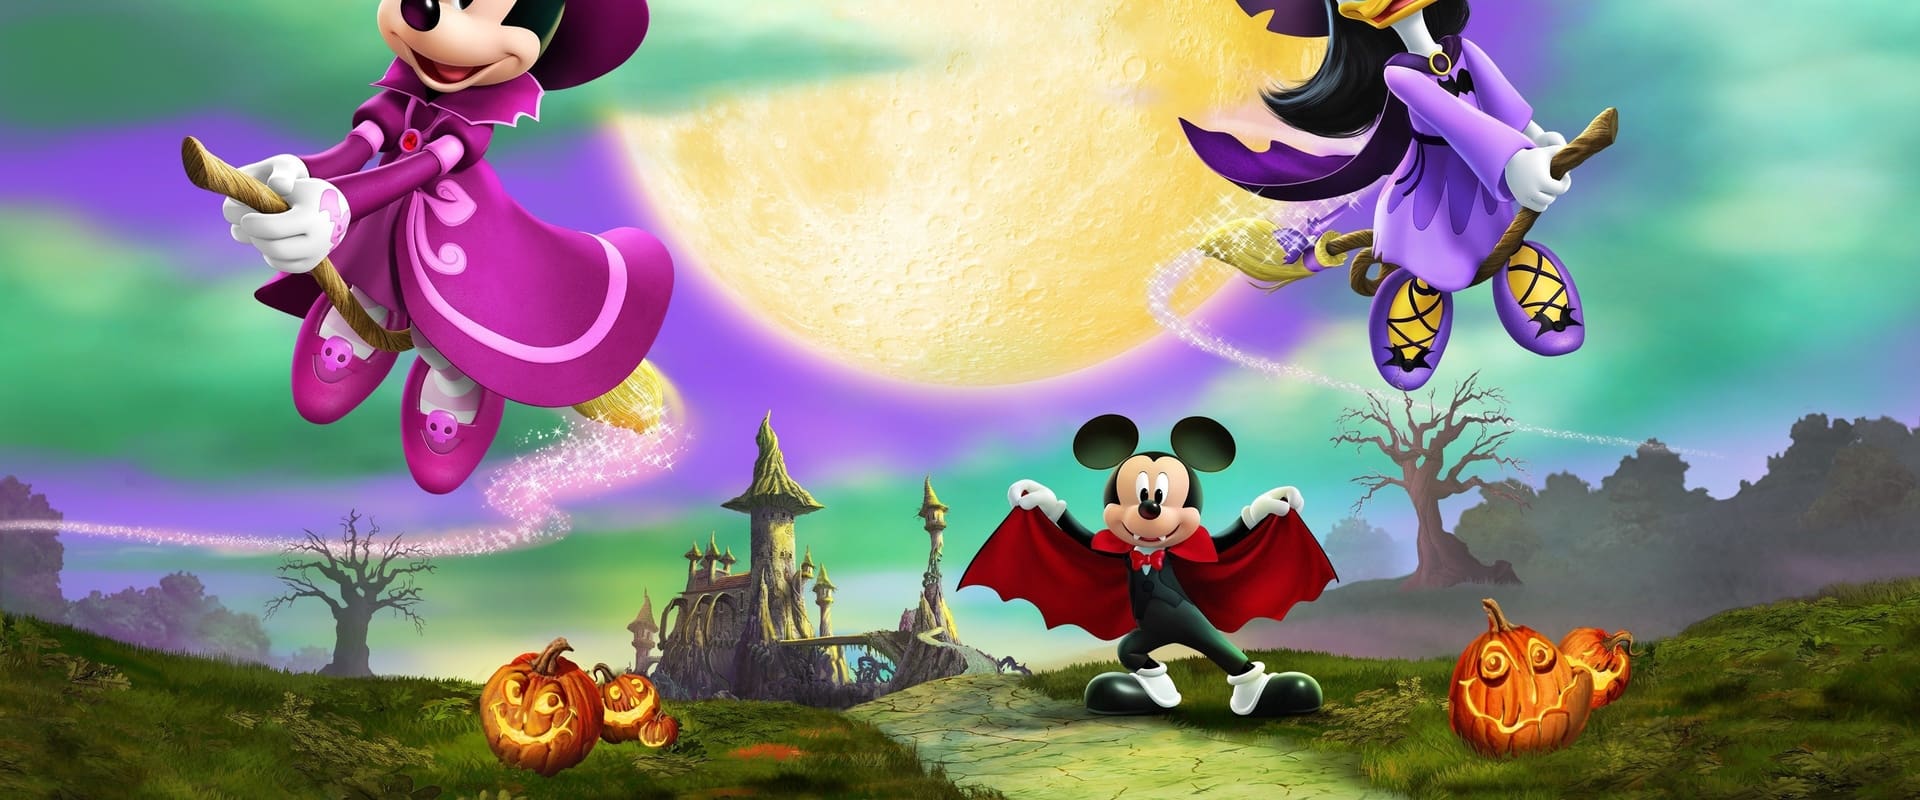 Mickey'nin İki Cadı Hikayesi./ Mickey's Tale of Two Witches